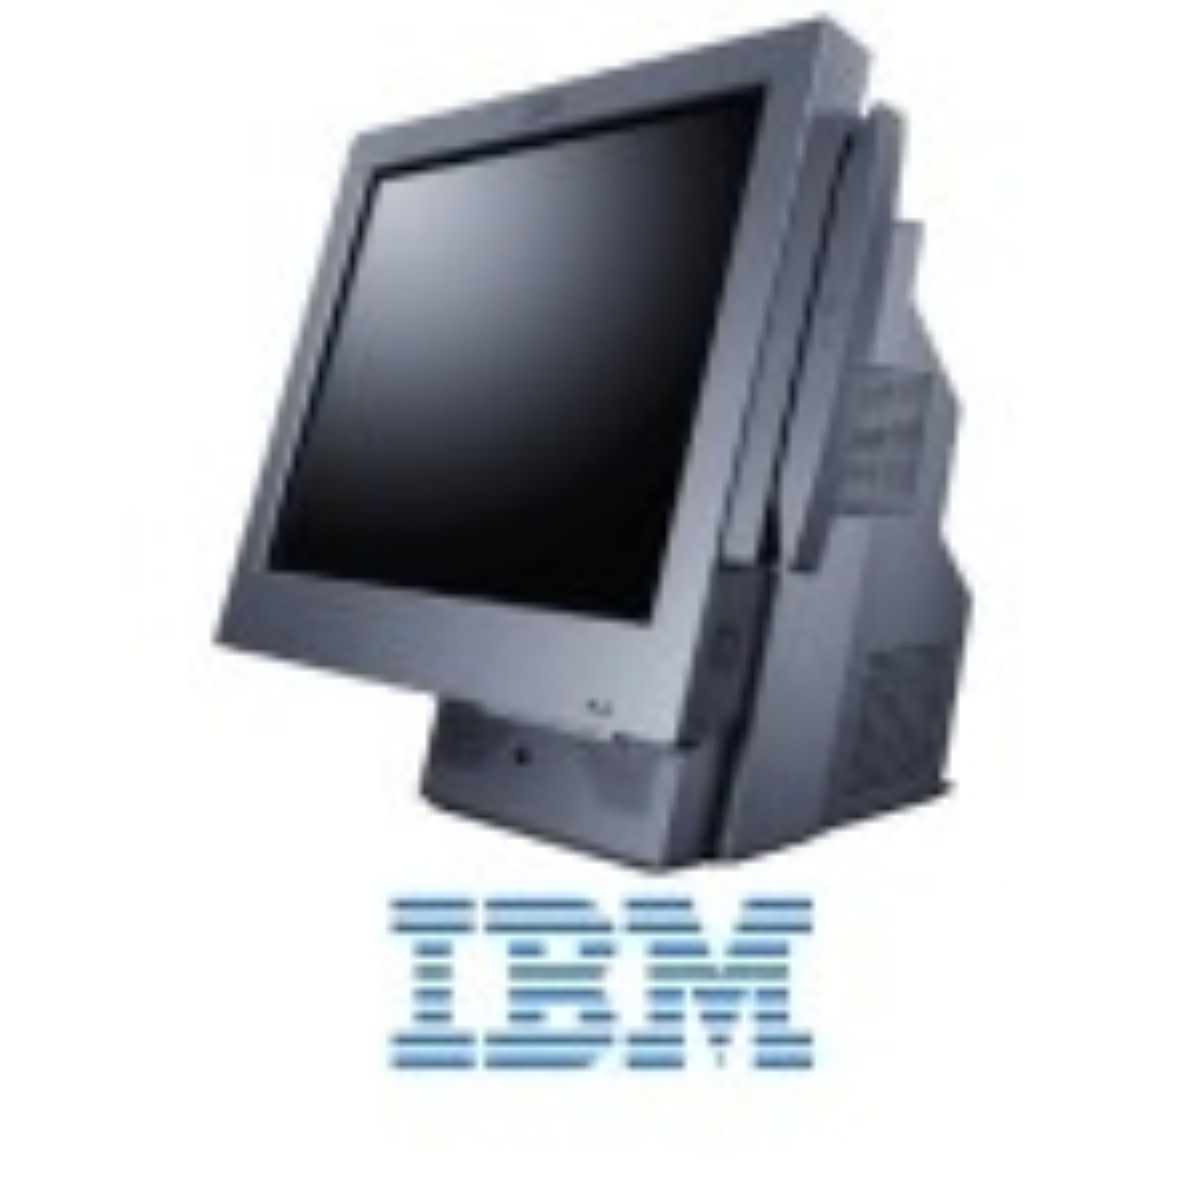 Dokunmatik PC | IBM Surepos 500 Dokunmatik Pos Bilgisayar | IBM |  | 